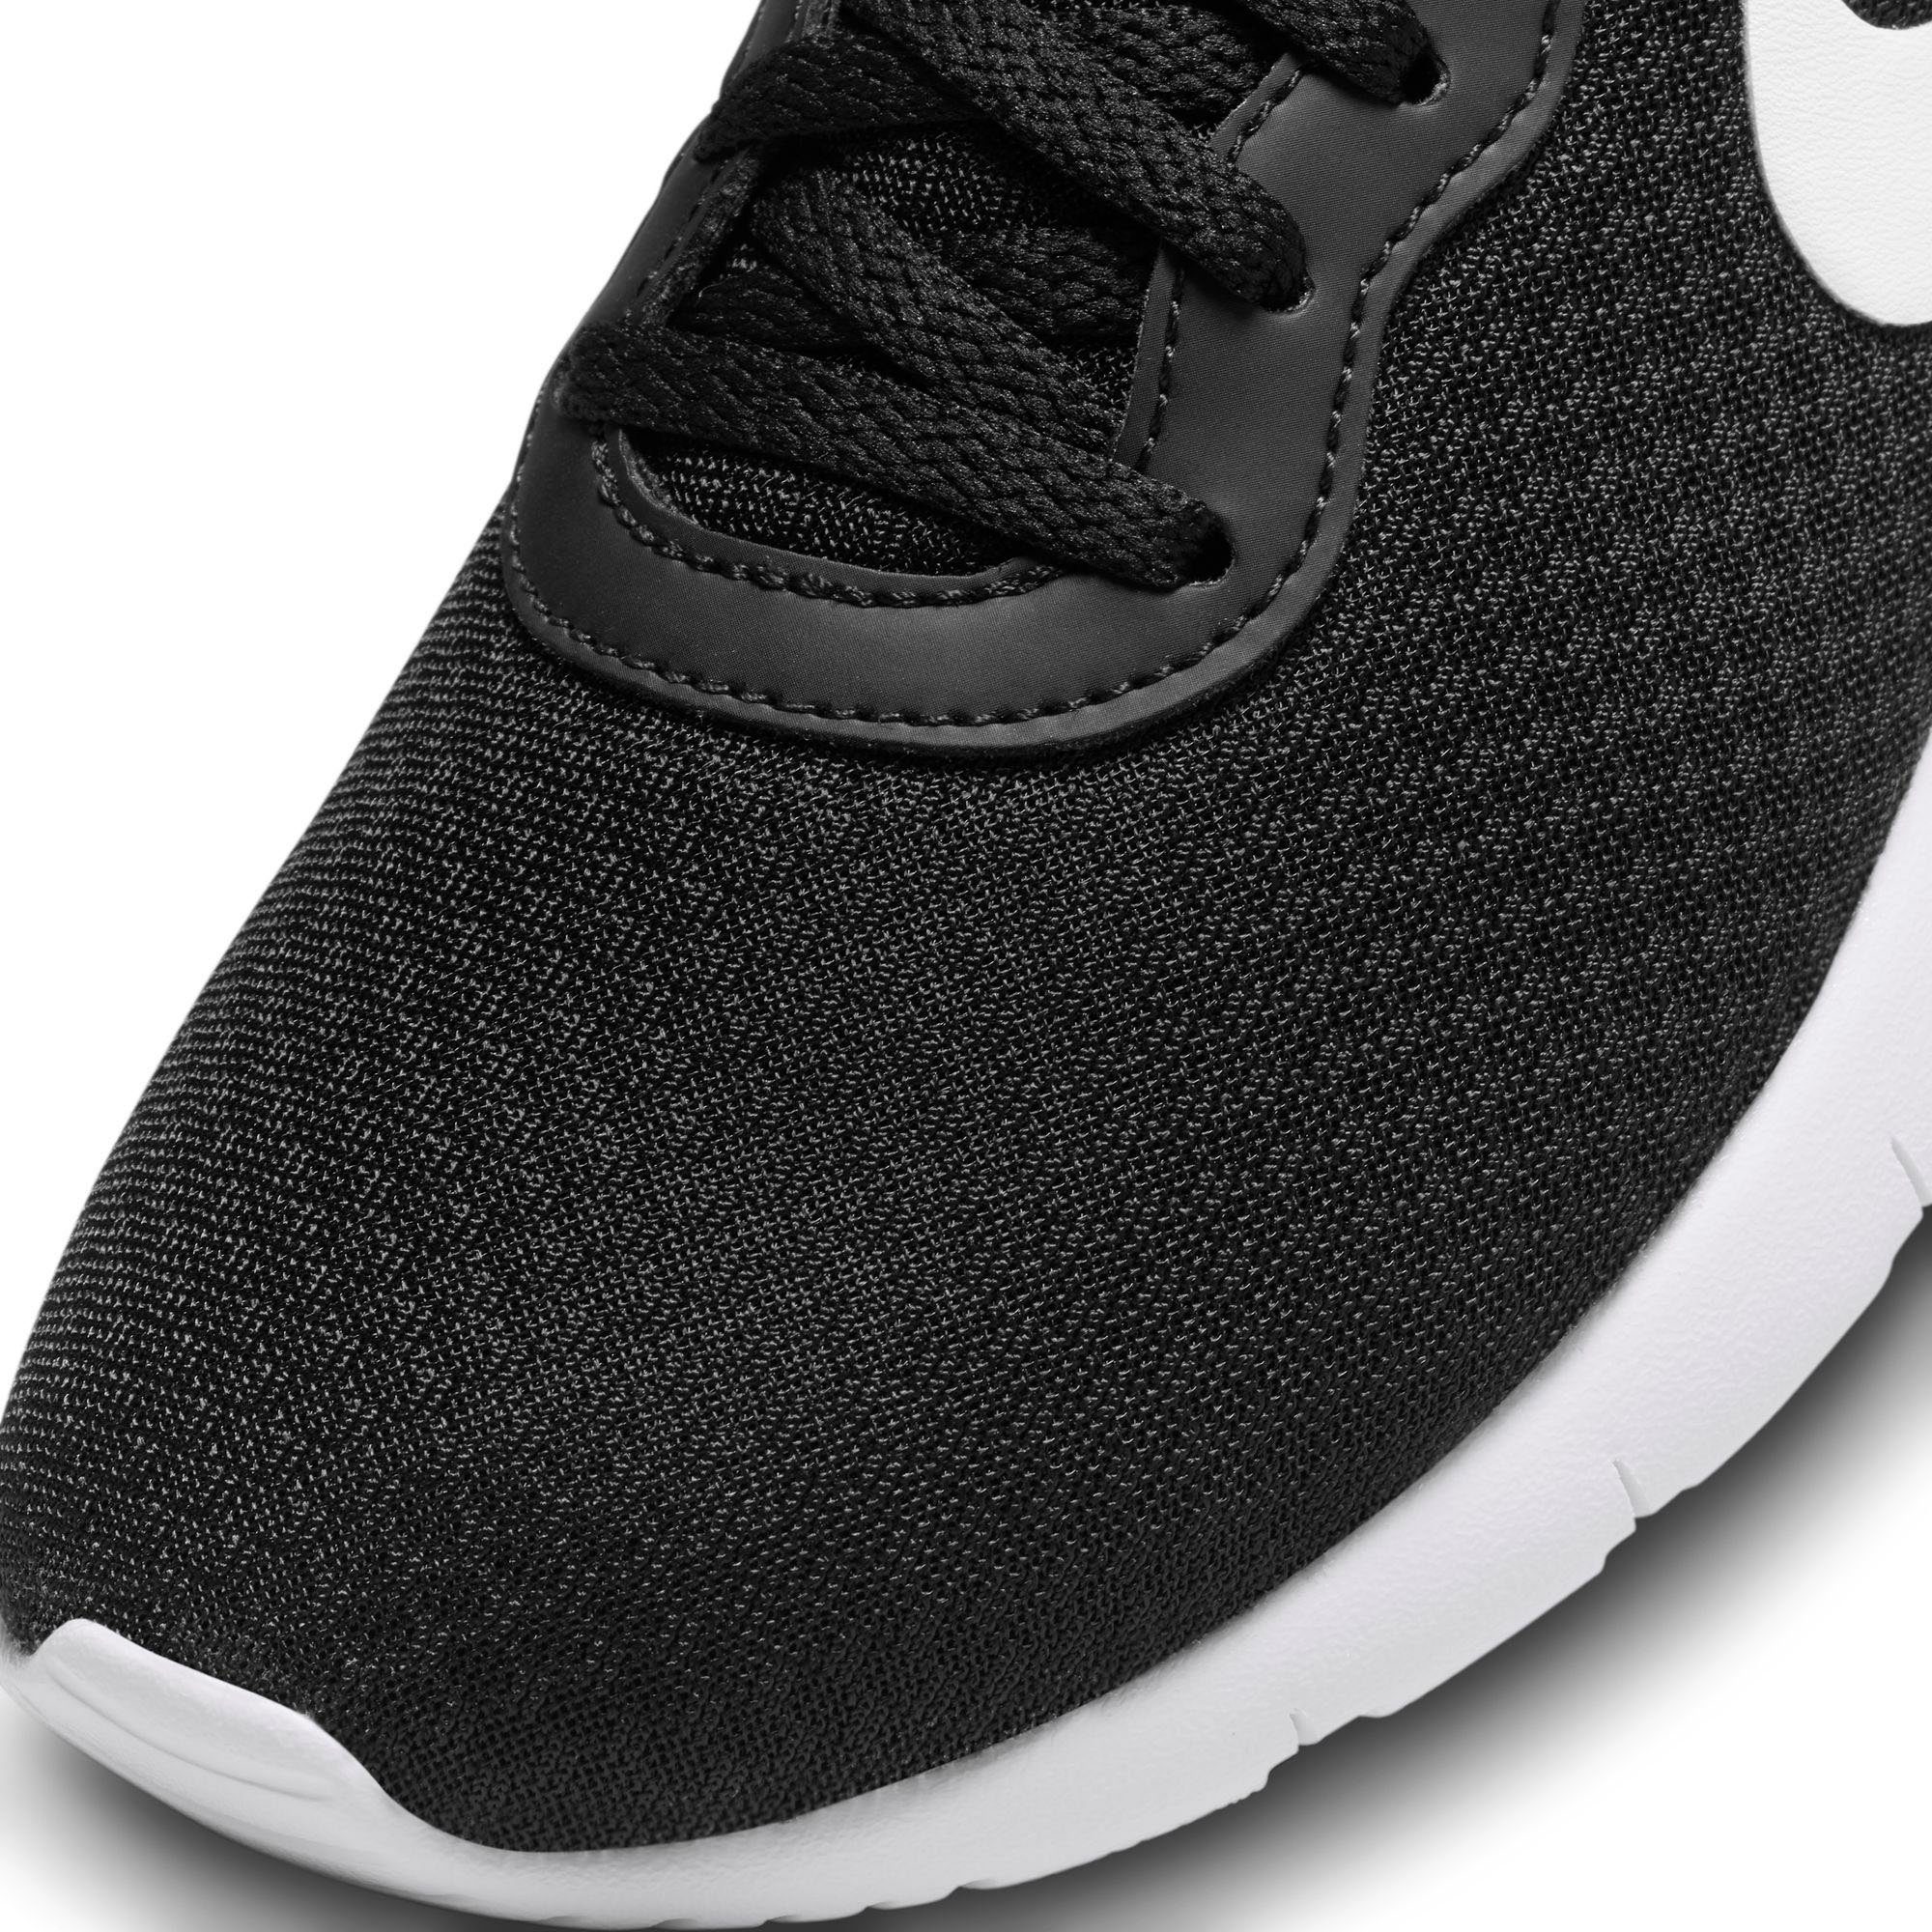 GO Sneaker black/white Nike (GS) TANJUN Sportswear